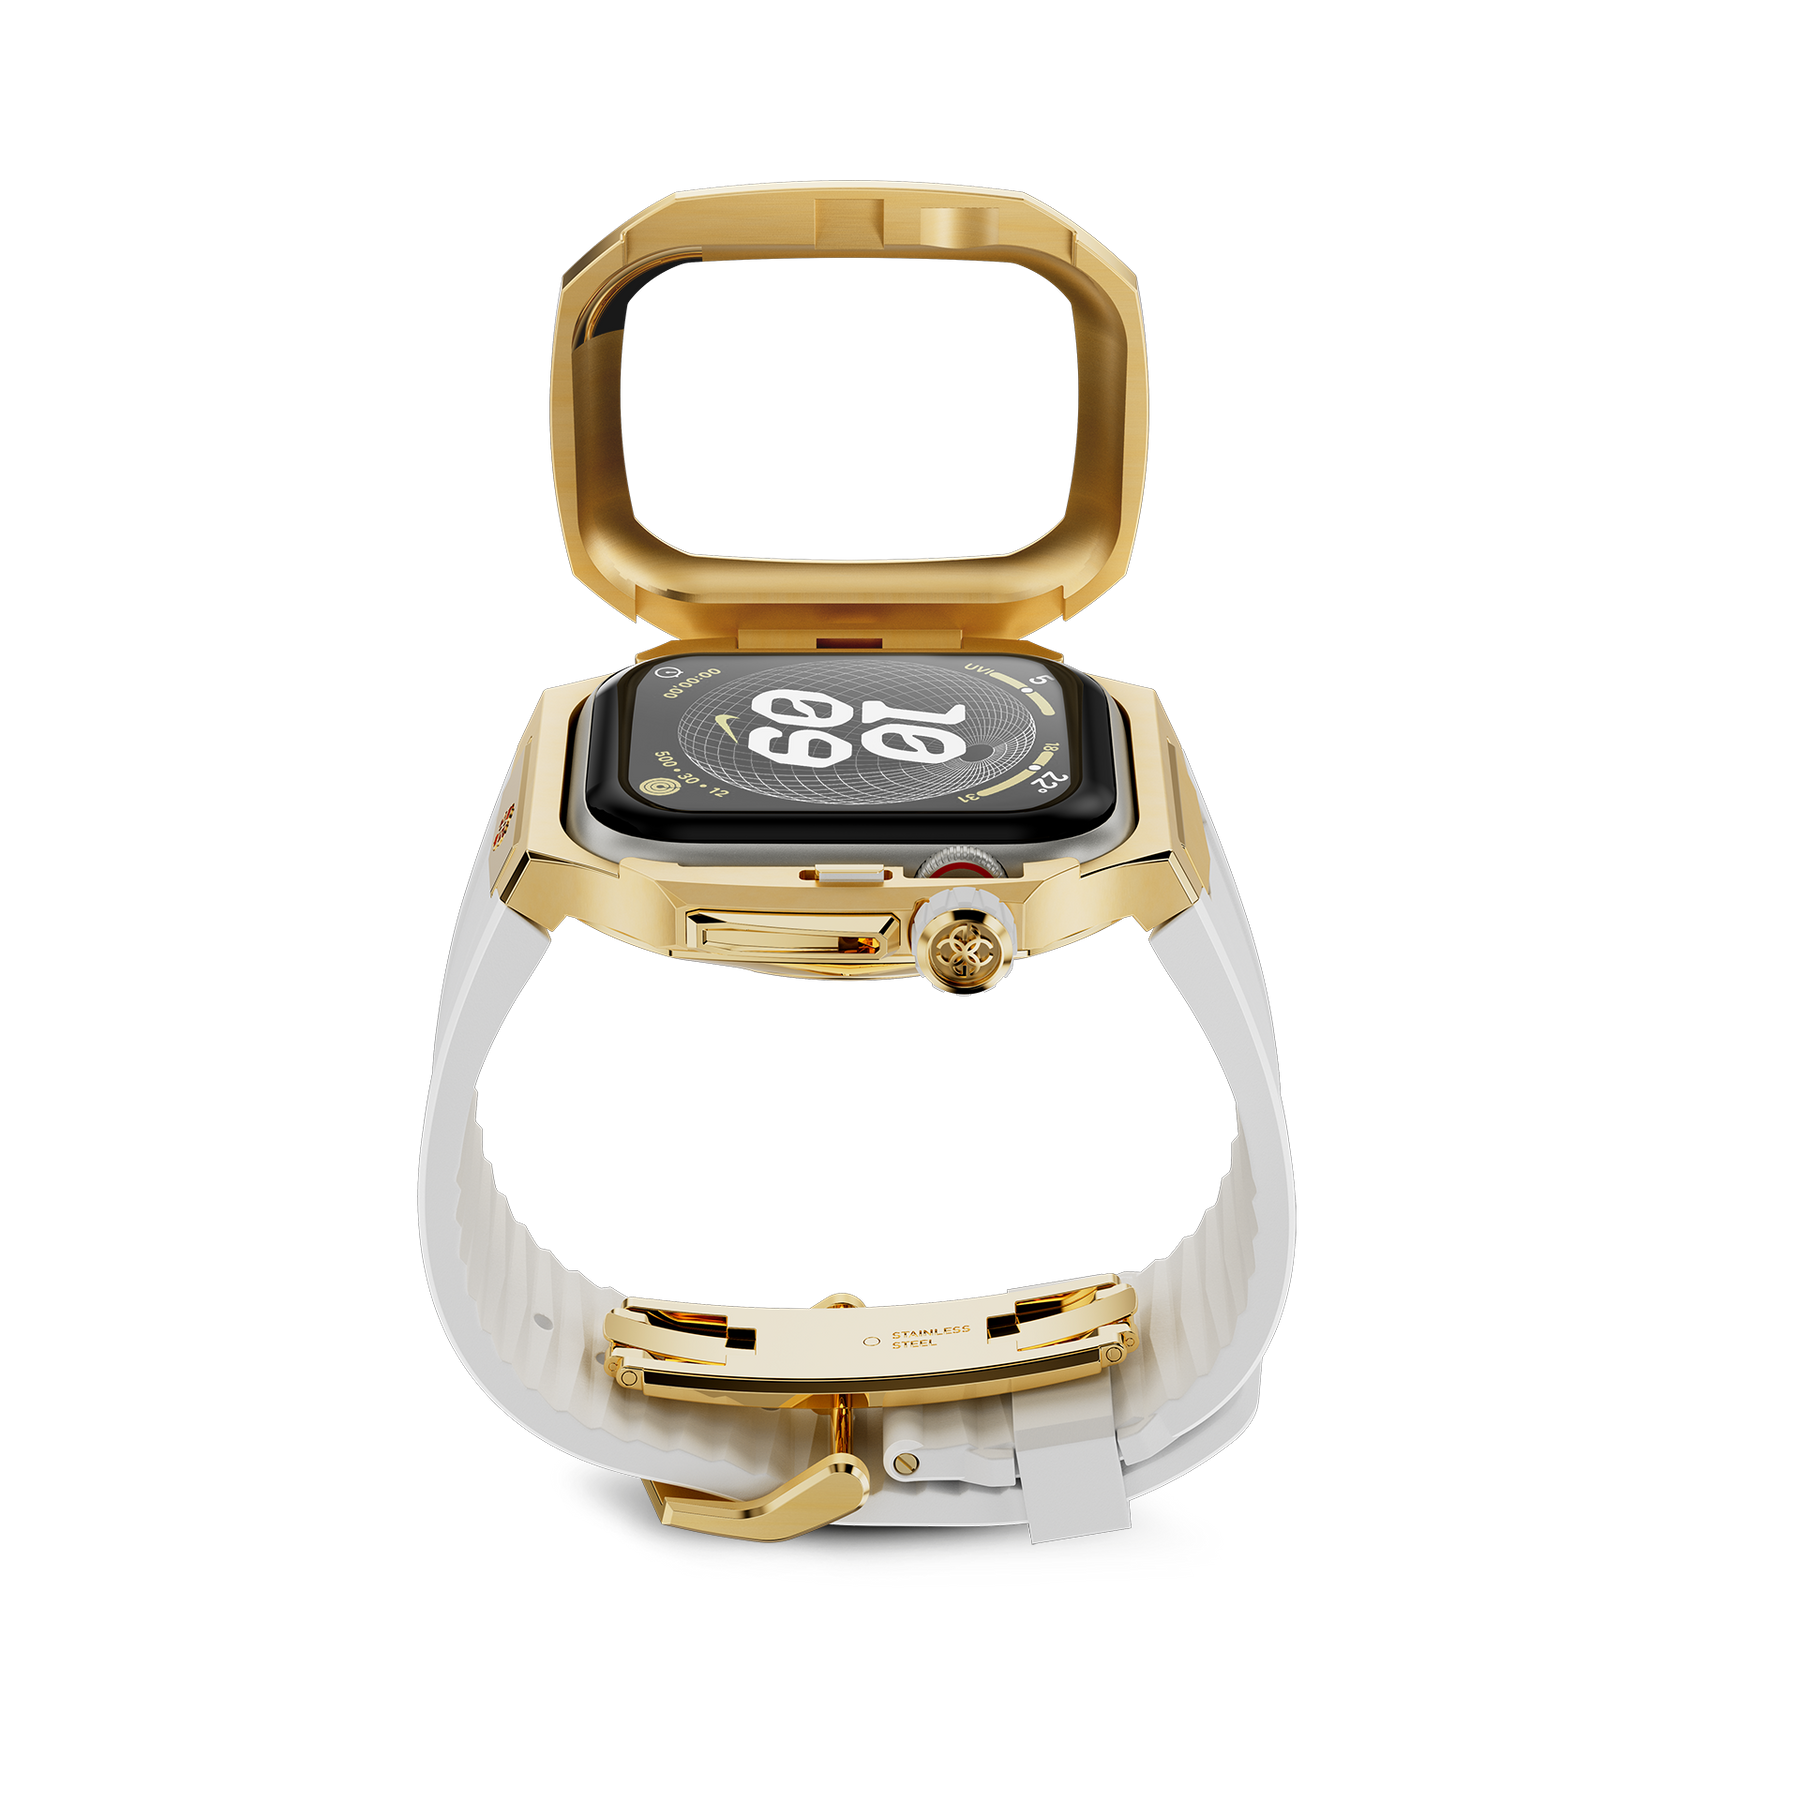 Apple Watch Case SPIII41 - Gold